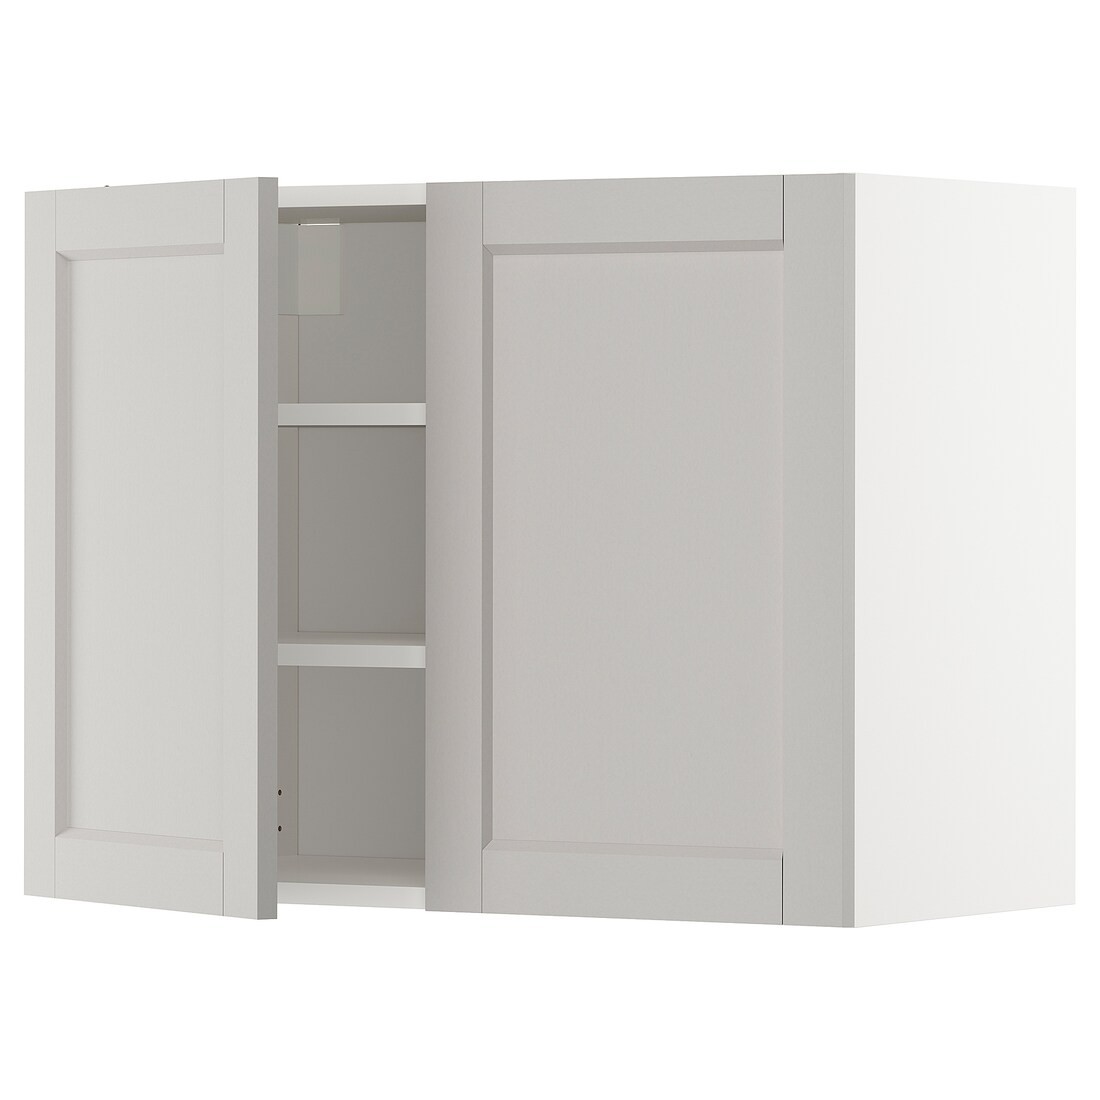 IKEA METOD МЕТОД Навесной шкаф с полками / 2 дверцы, белый / Lerhyttan светло-серый, 80x60 см 69468788 | 694.687.88